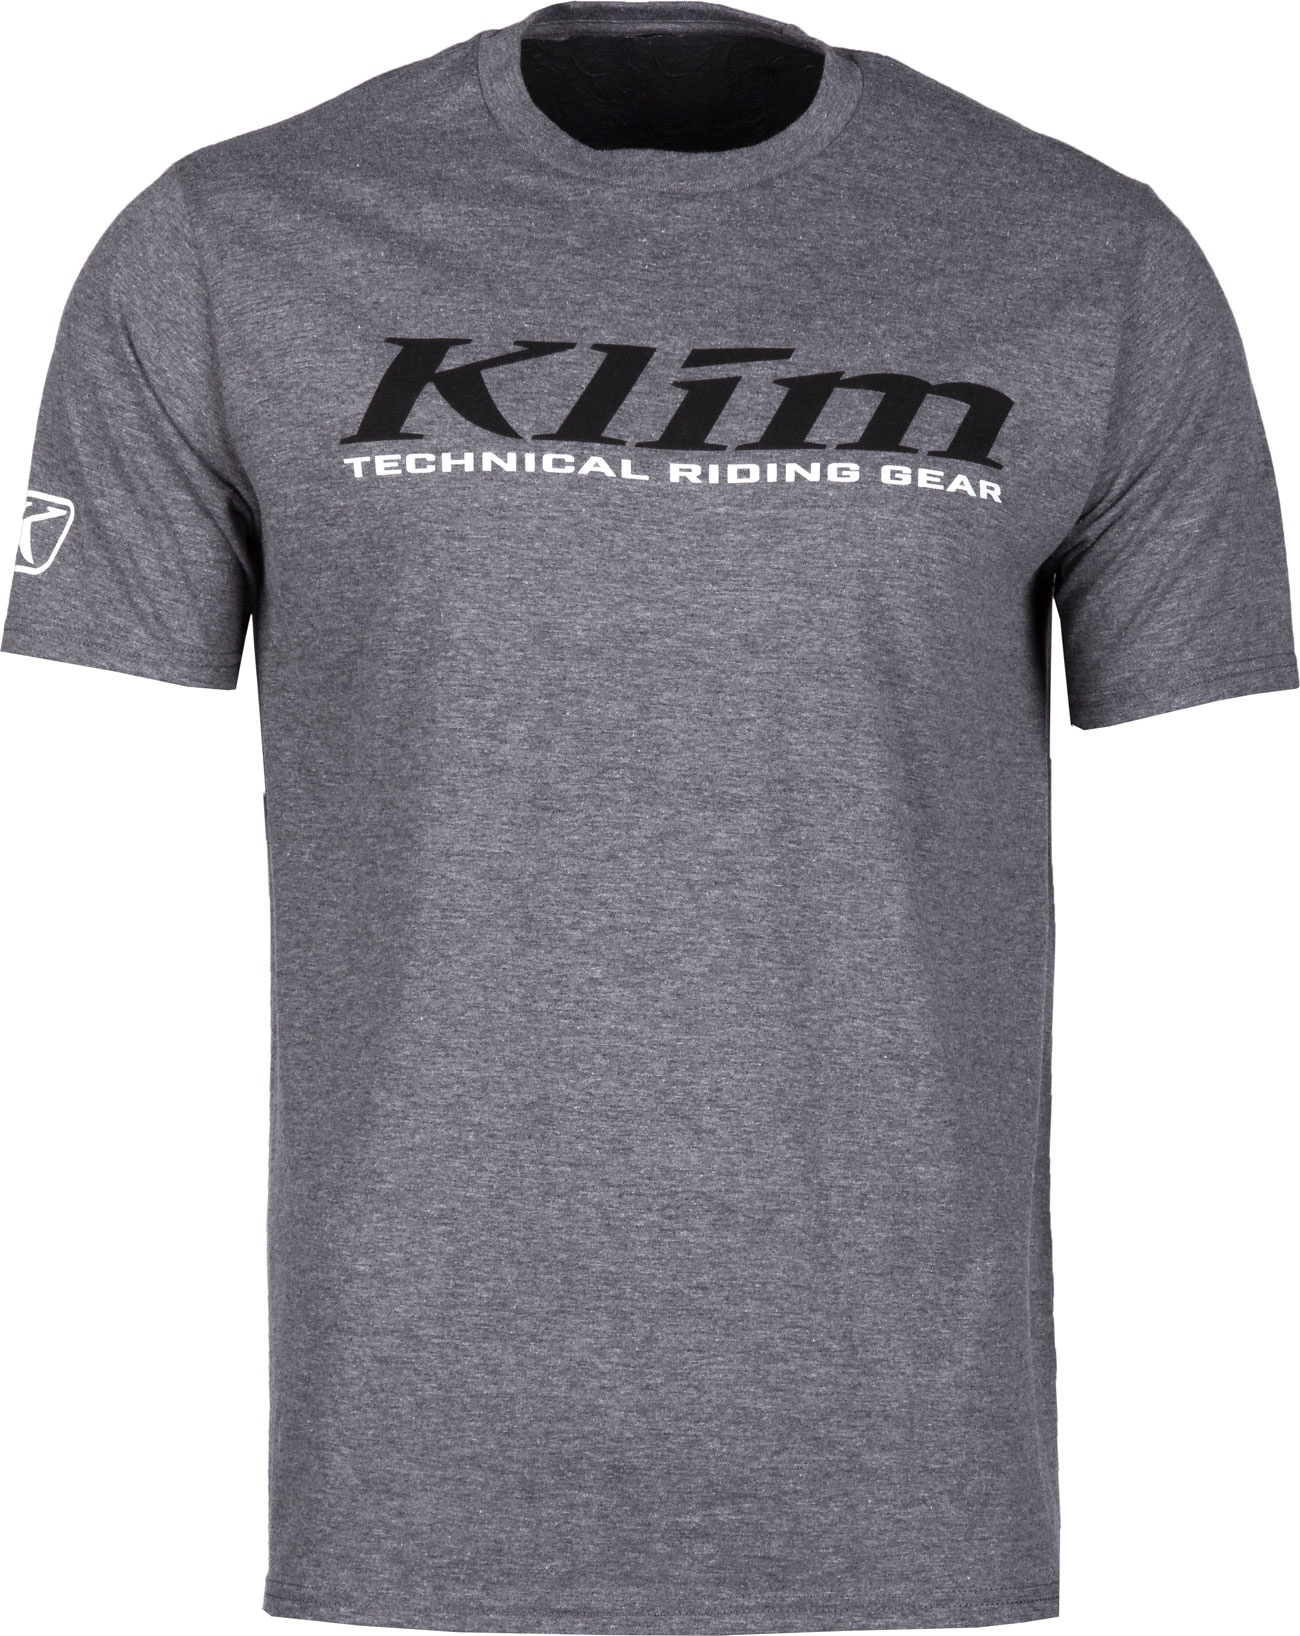 Klim K Corp, t-shirt - Gris/Noir - M